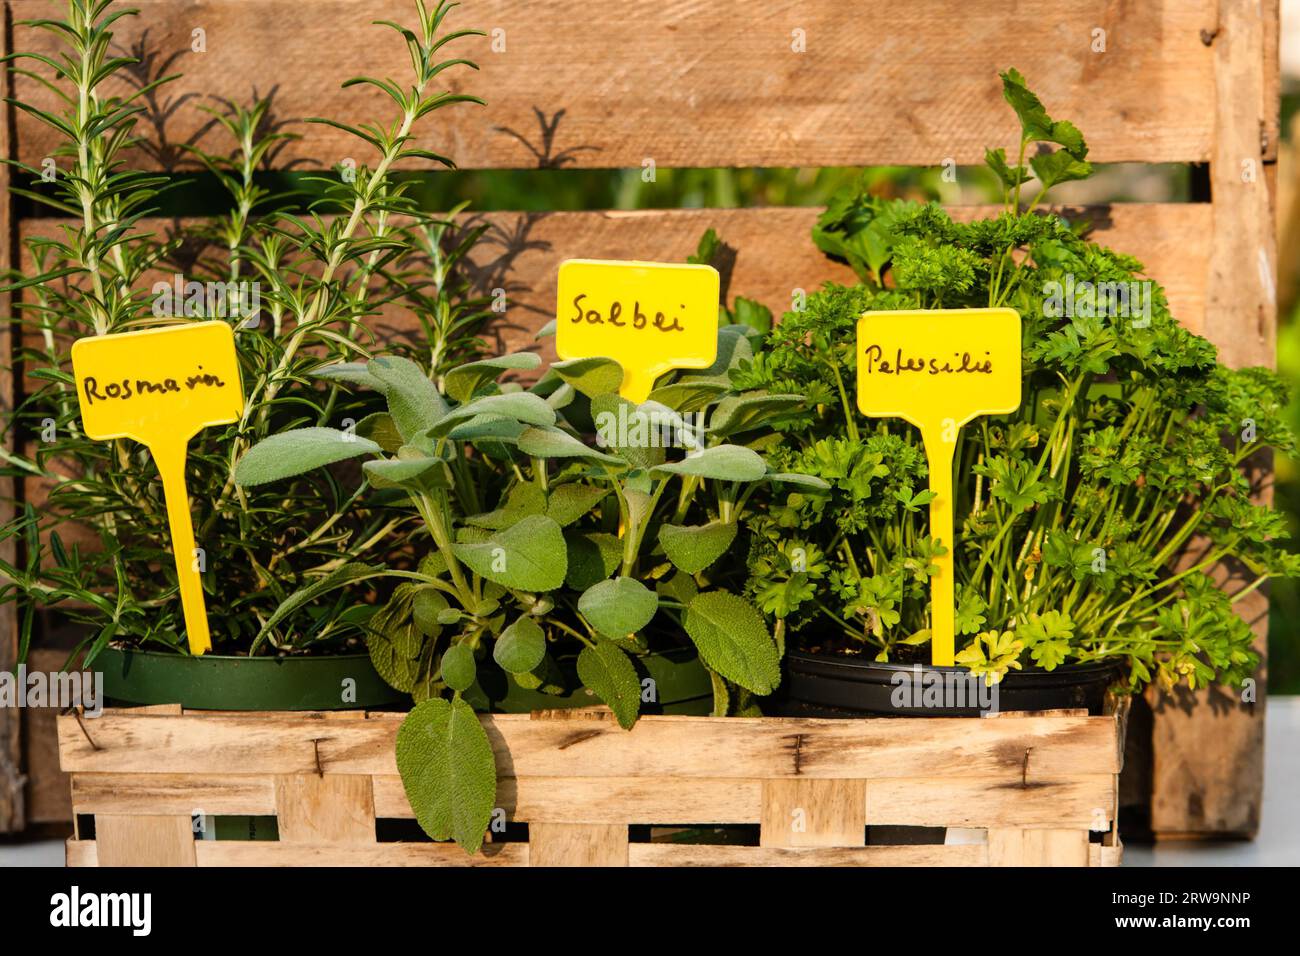 Rosemary, sage (salvia) and parsley, Rosmary and parsley Stock Photo